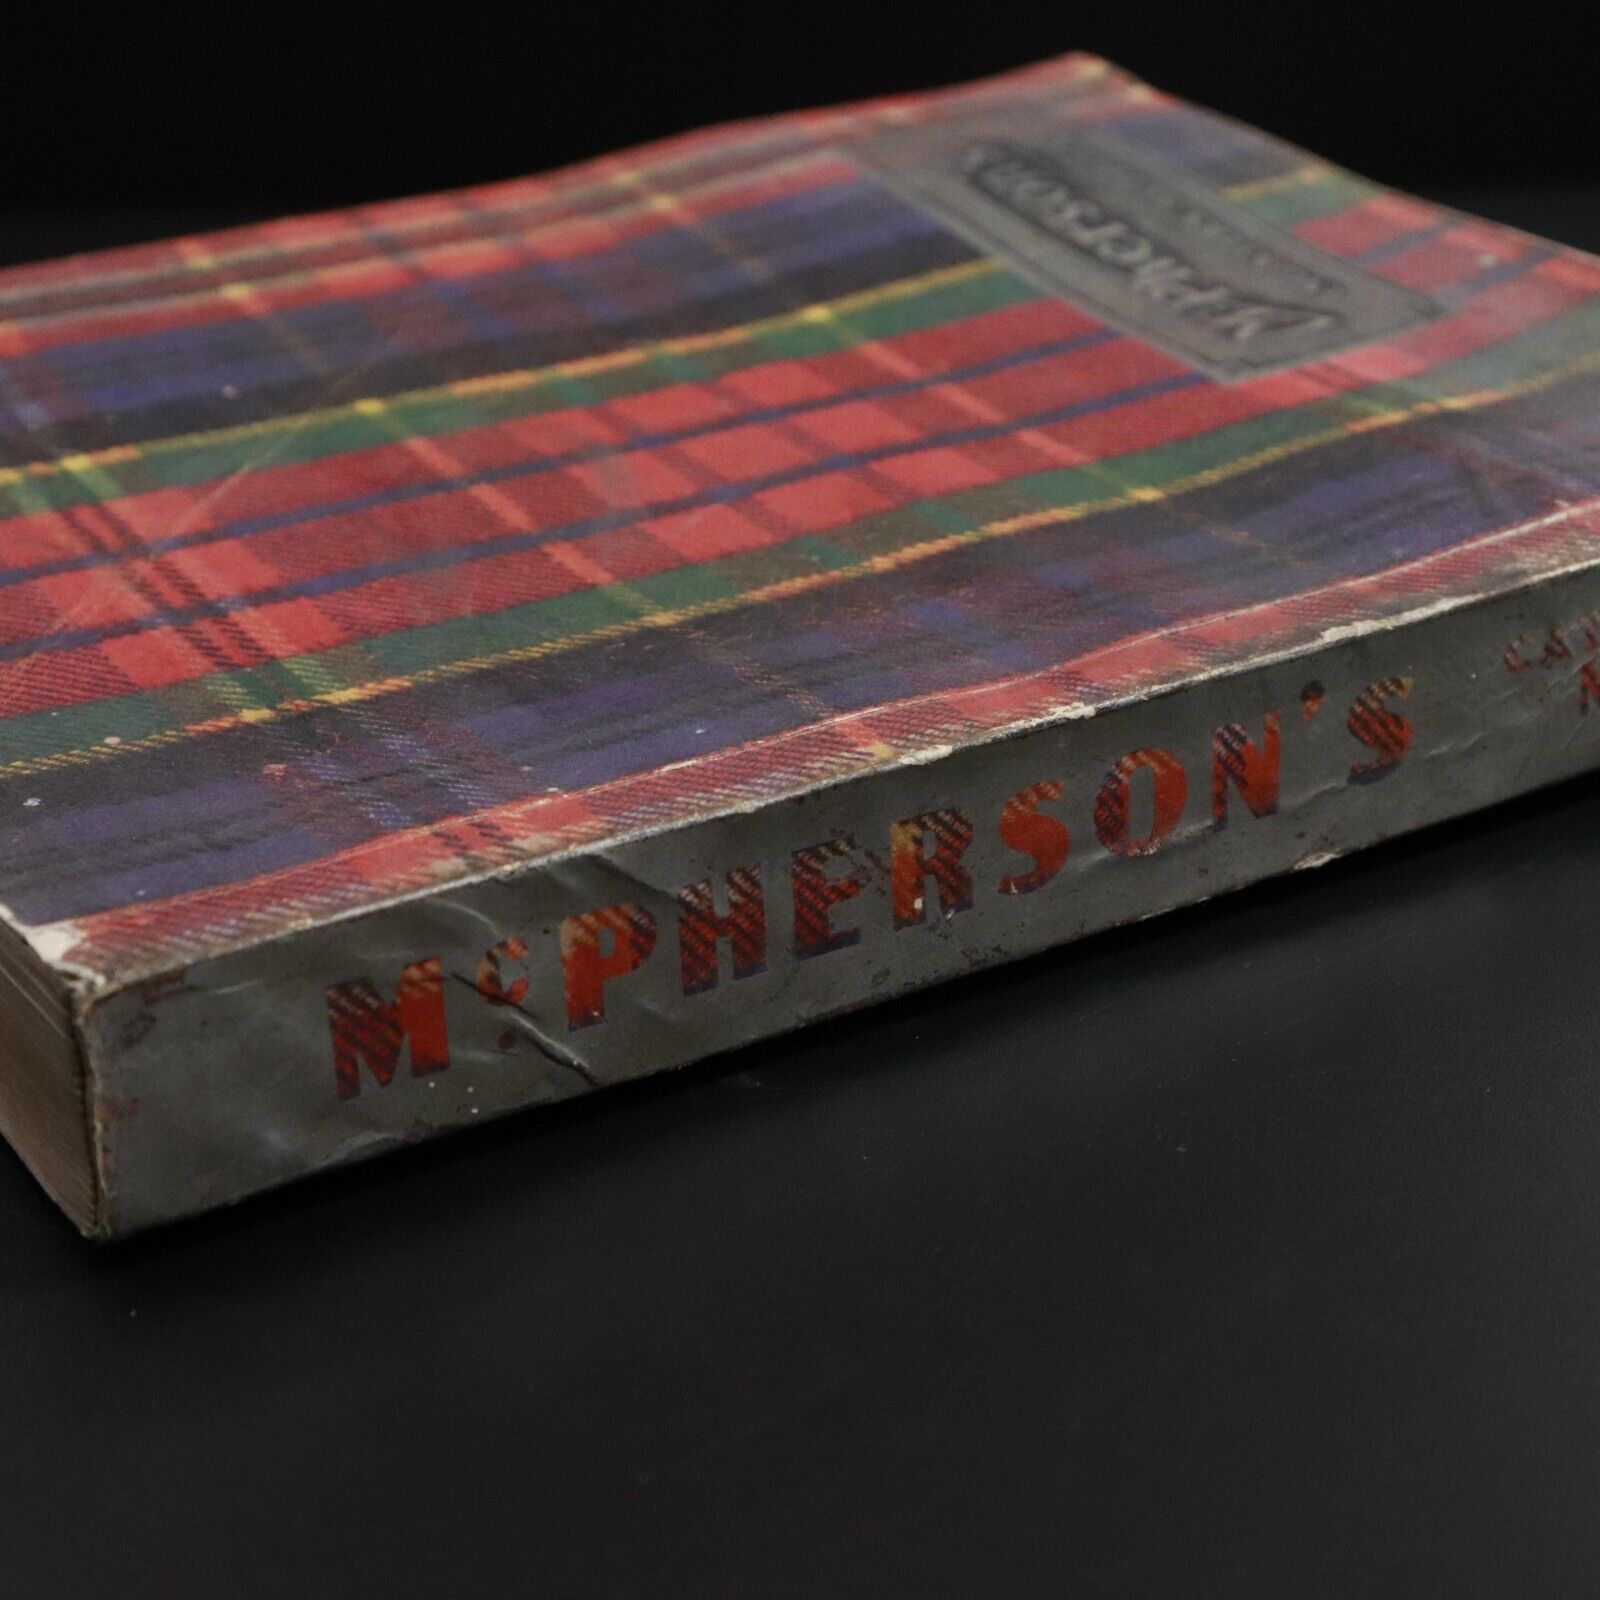 1955 McPherson's Ltd Engineers Supplies Catalogue Vintage Book Melbourne